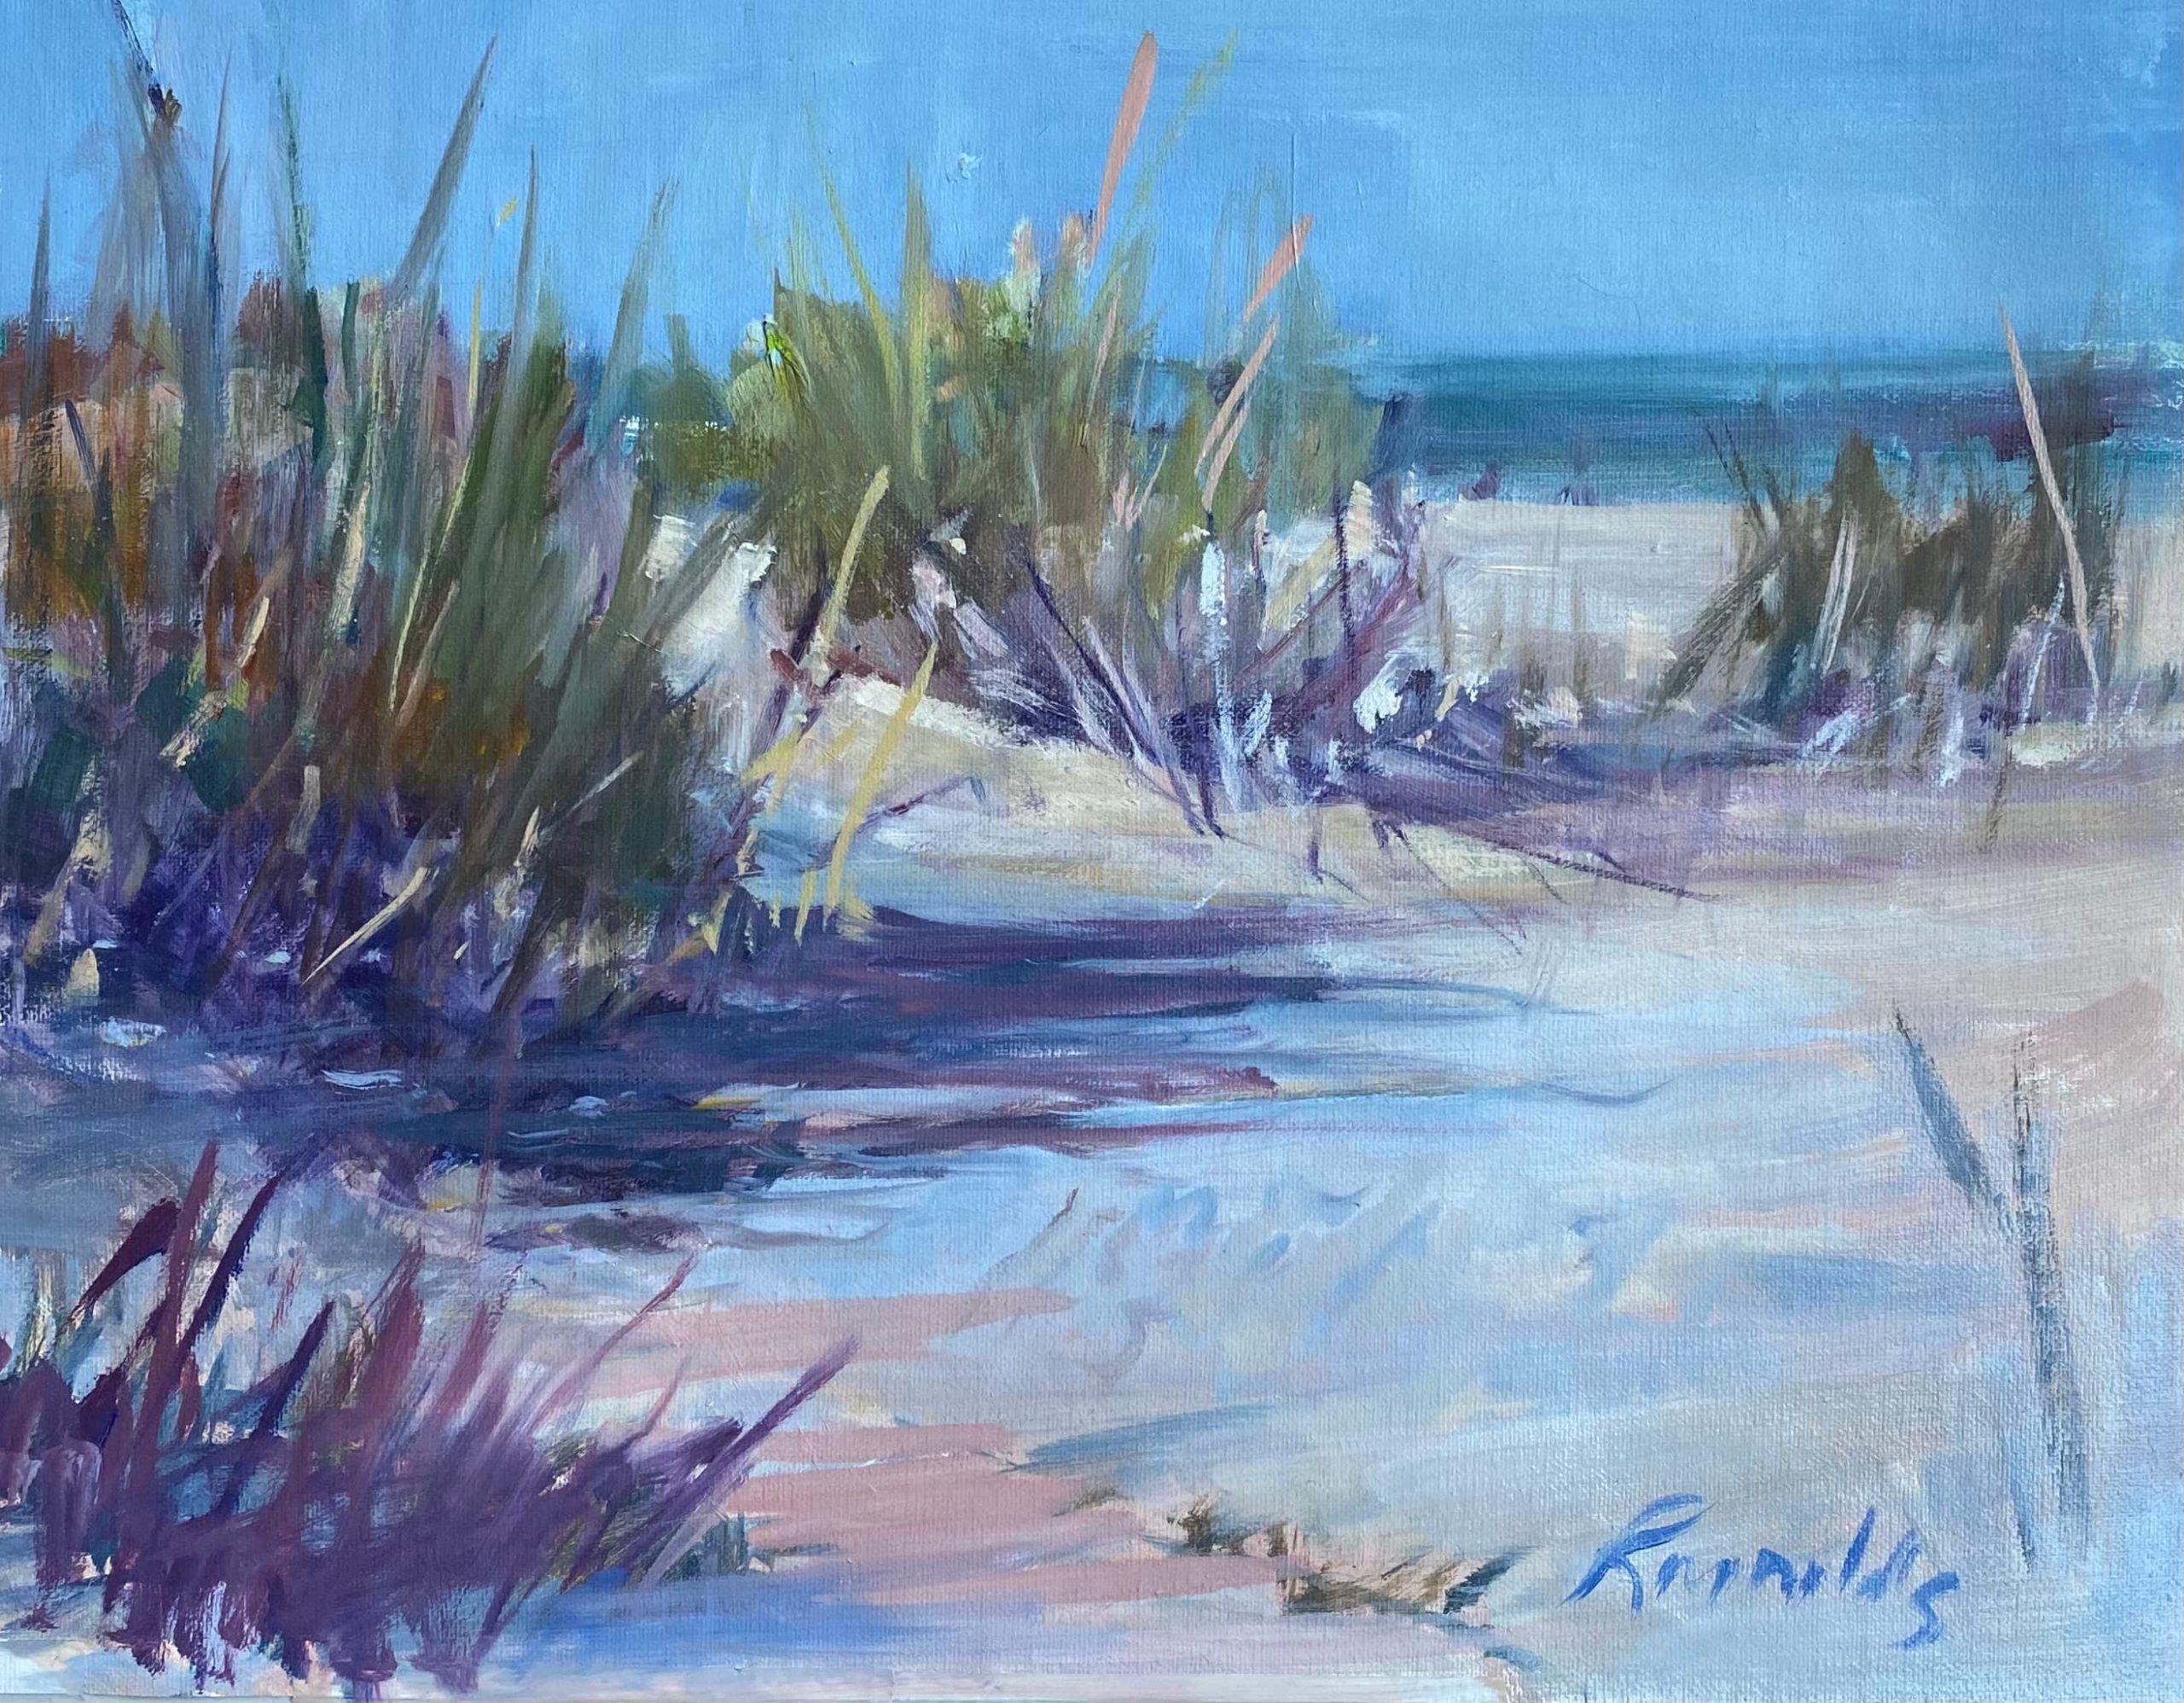 Beach Grasses and Shadows by Sara Jane Reynolds.